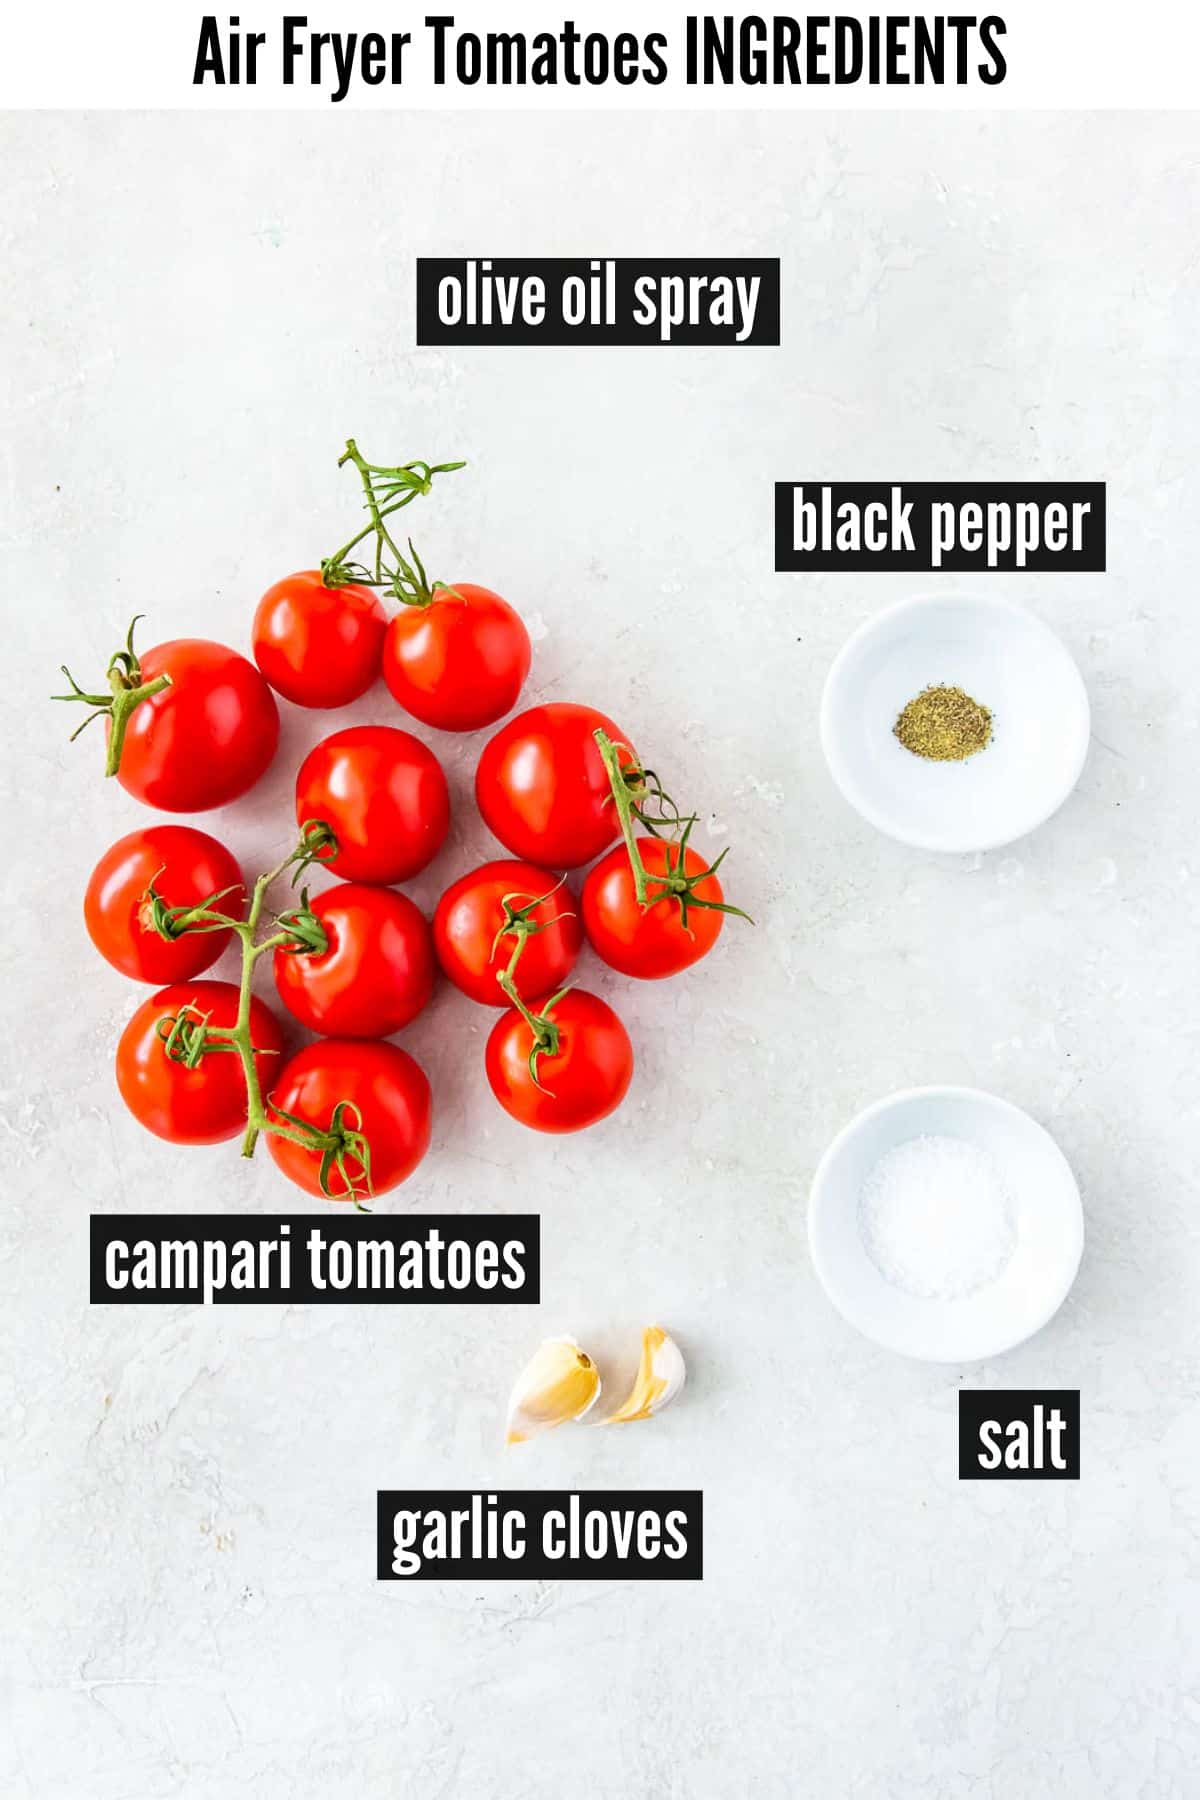 air fryer tomatoes labelled ingredients.